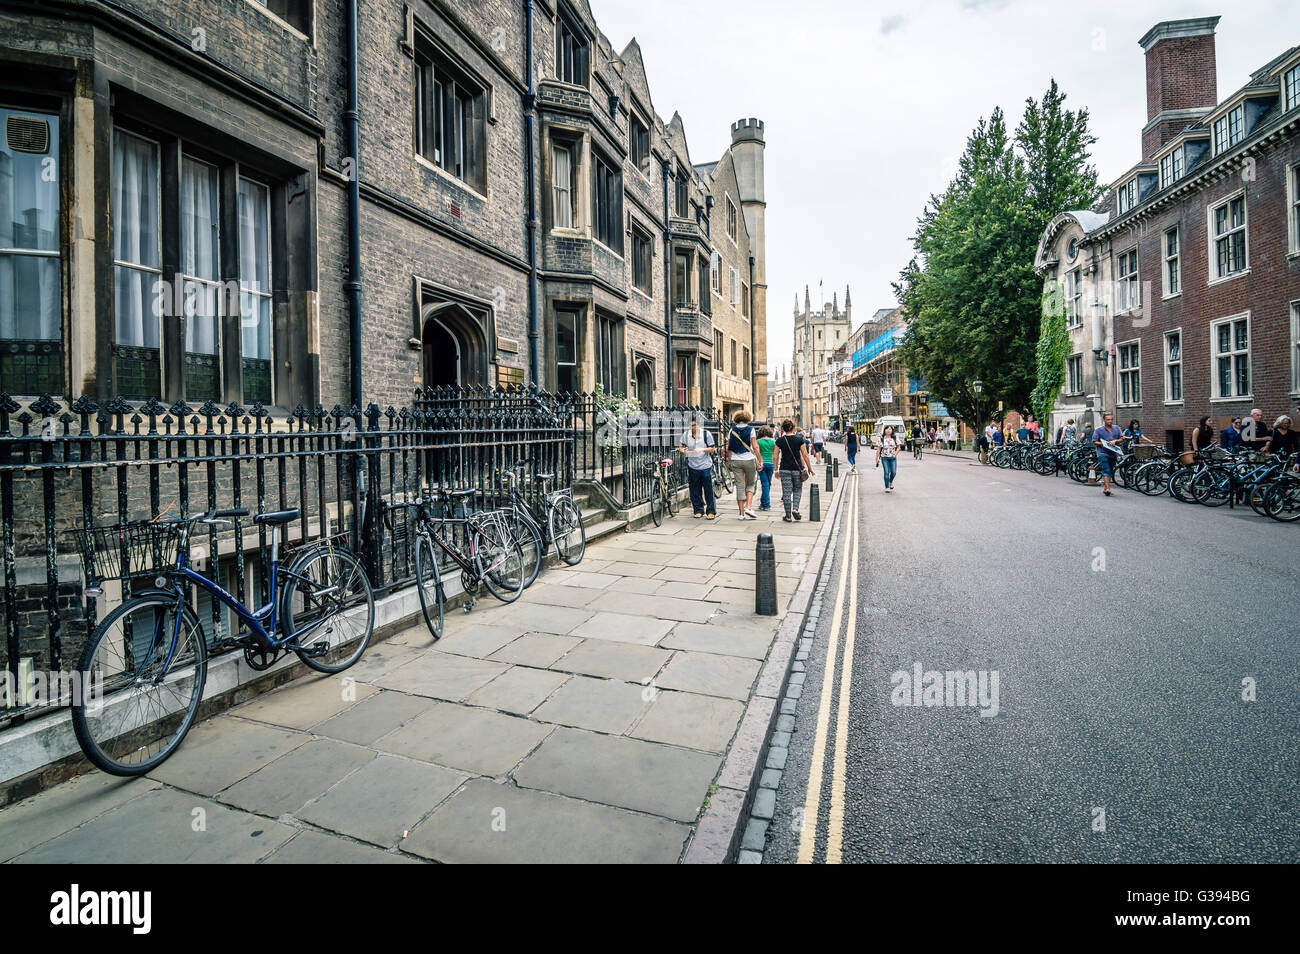 CAMBRIDGE, UK - AUGUST 11, 2015:  People in a Street in Cambridge. Stock Photo